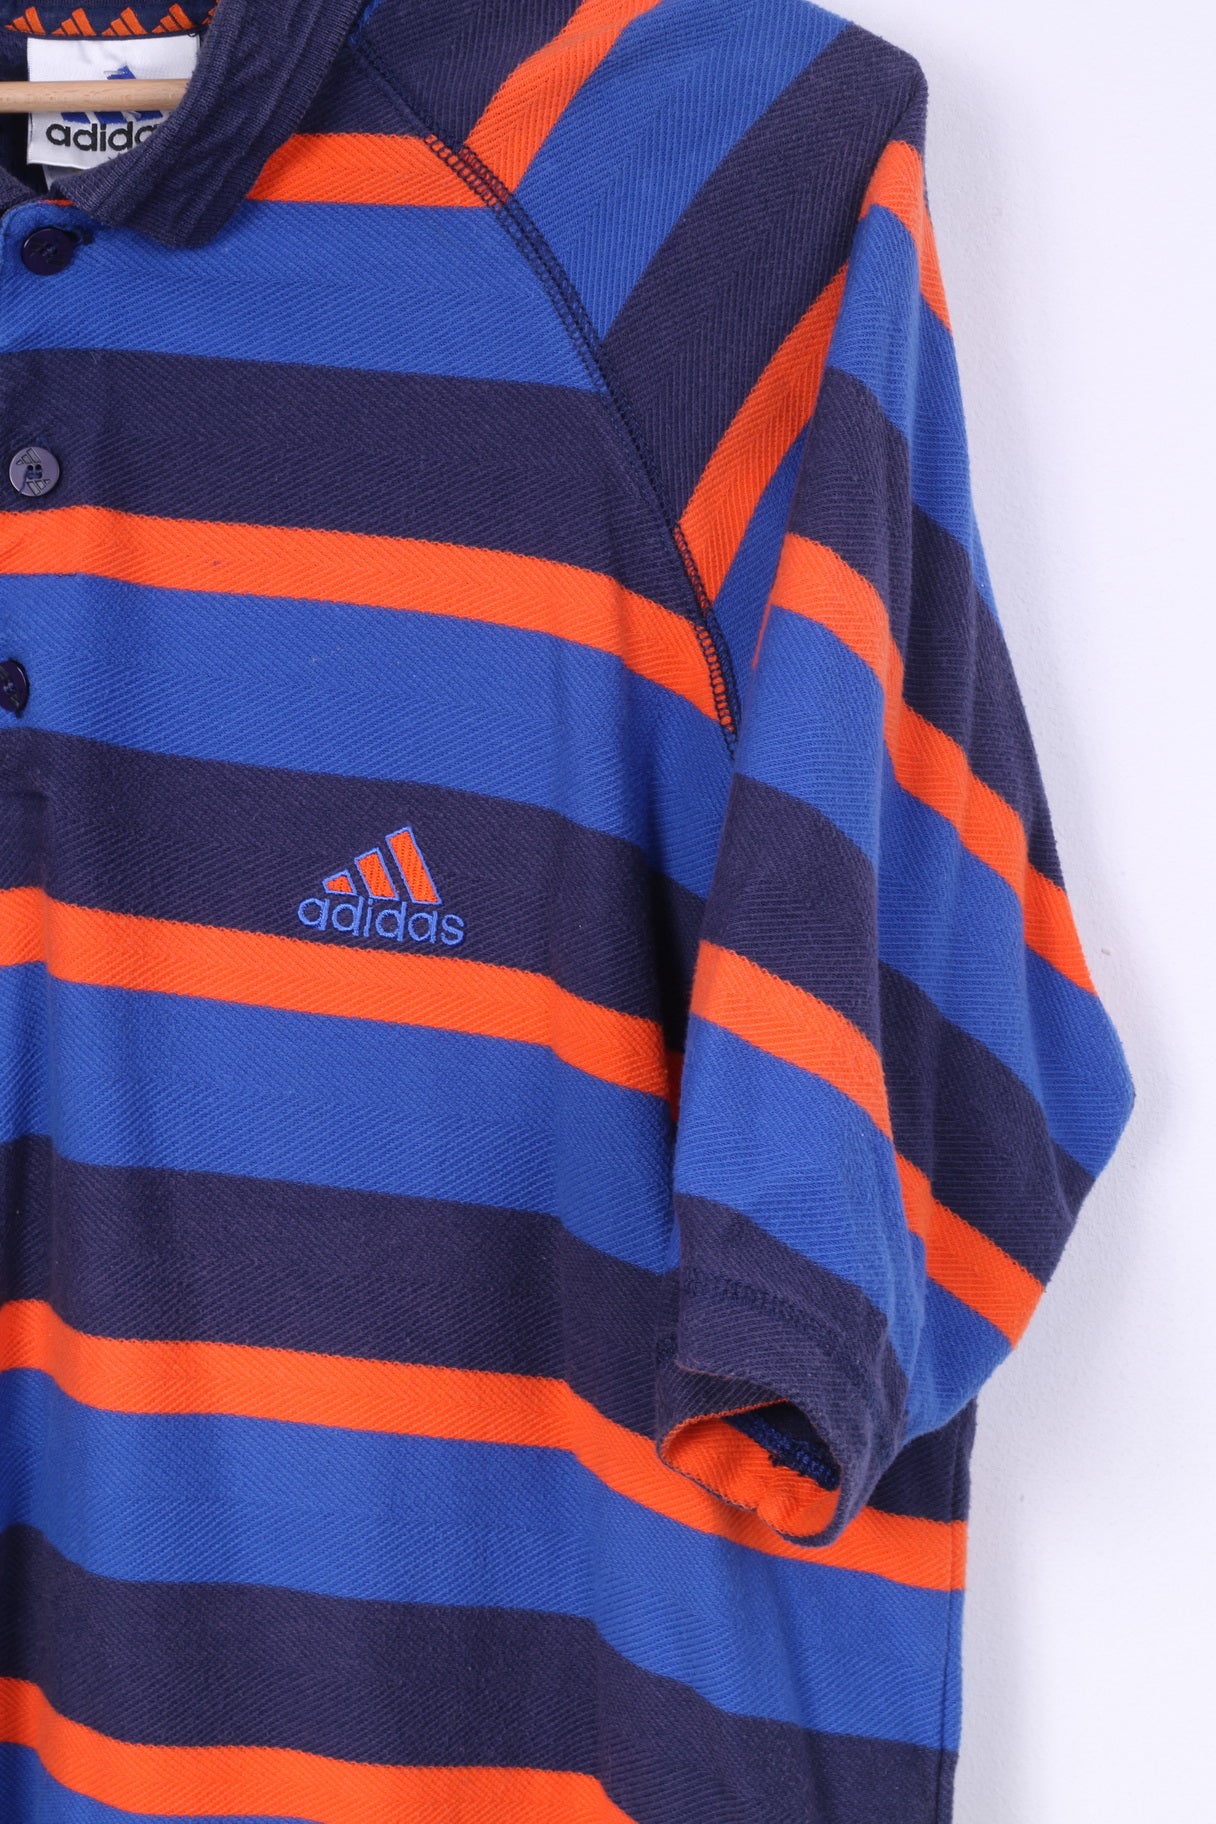 Adidas Mens L Polo Shirt Navy Blue Striped Cotton Short Sleeve Summer Vintage